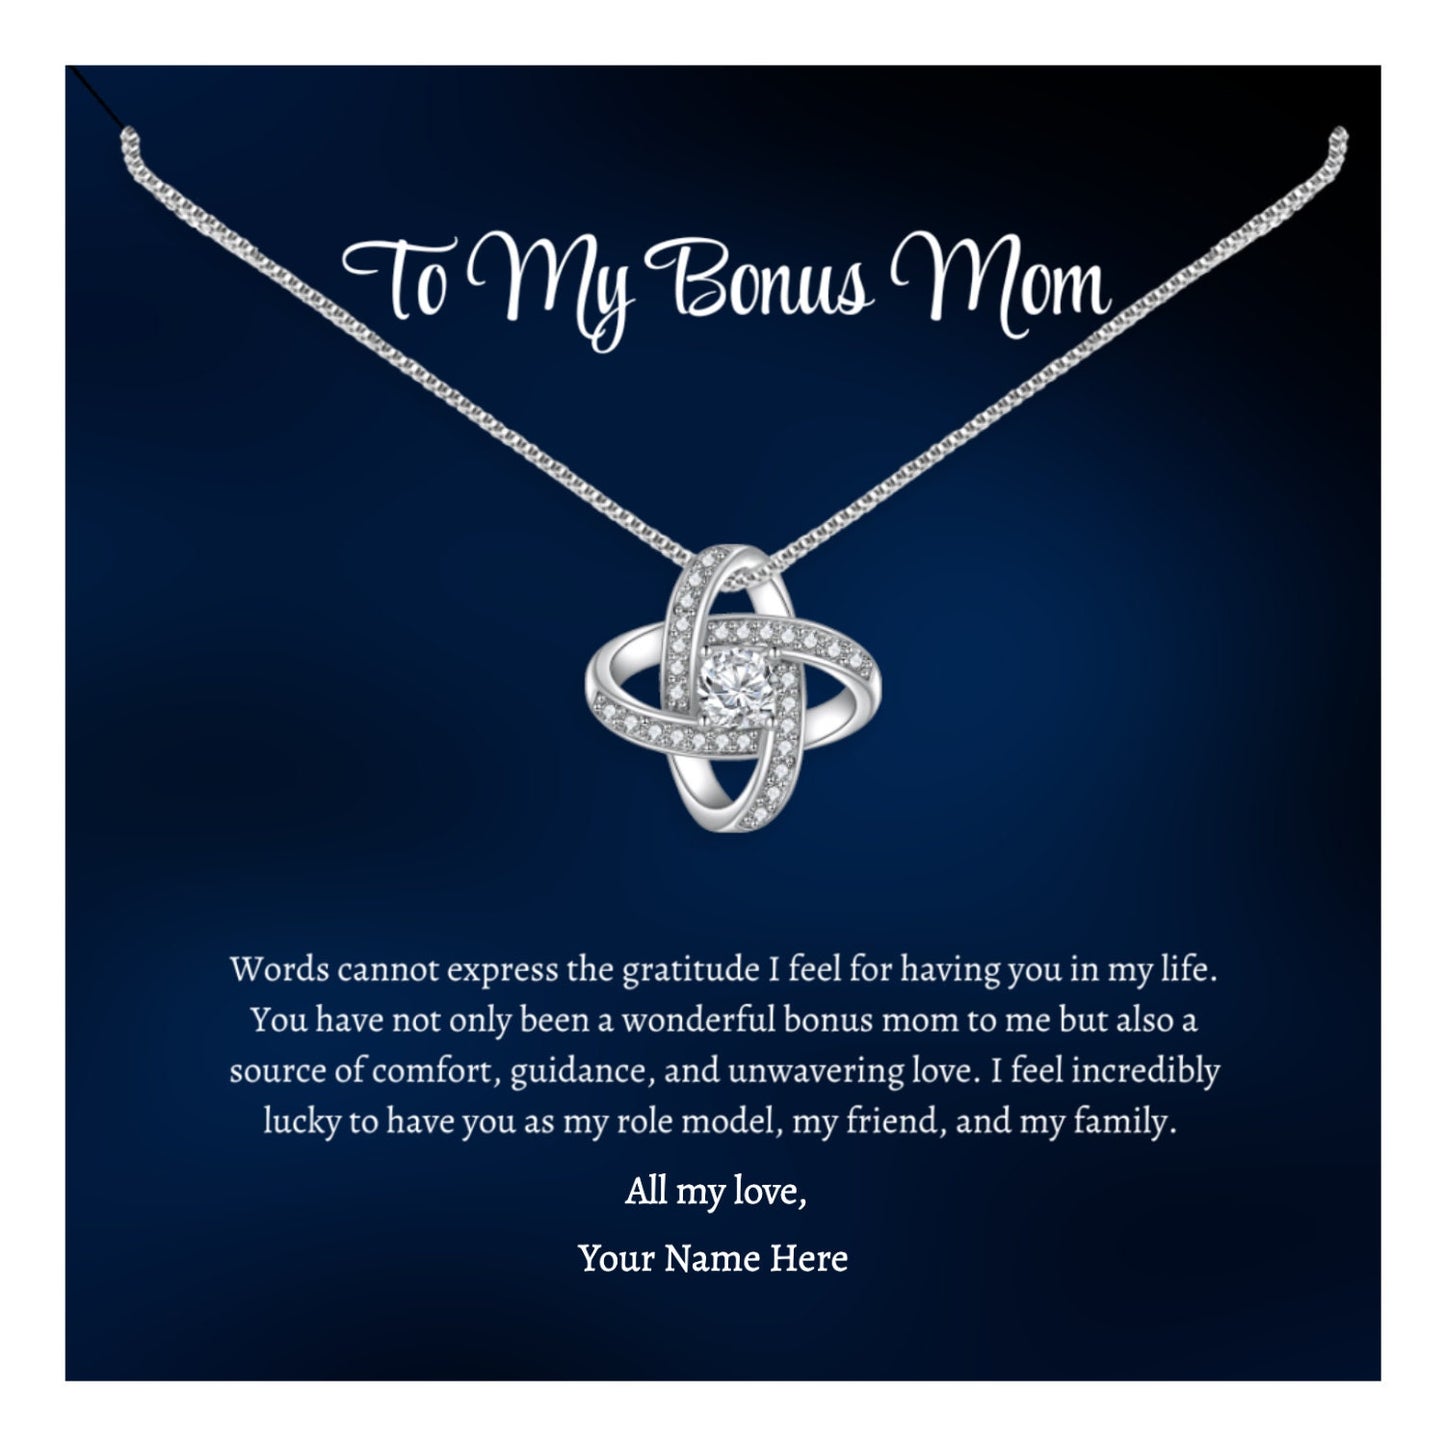 Bonus Mom Necklace, Bonus Mom Gift, Step Mom Gift, Second Mom Gift, Stepmom Wedding Gift from the Groom, Bonus Mom Gift from Bride